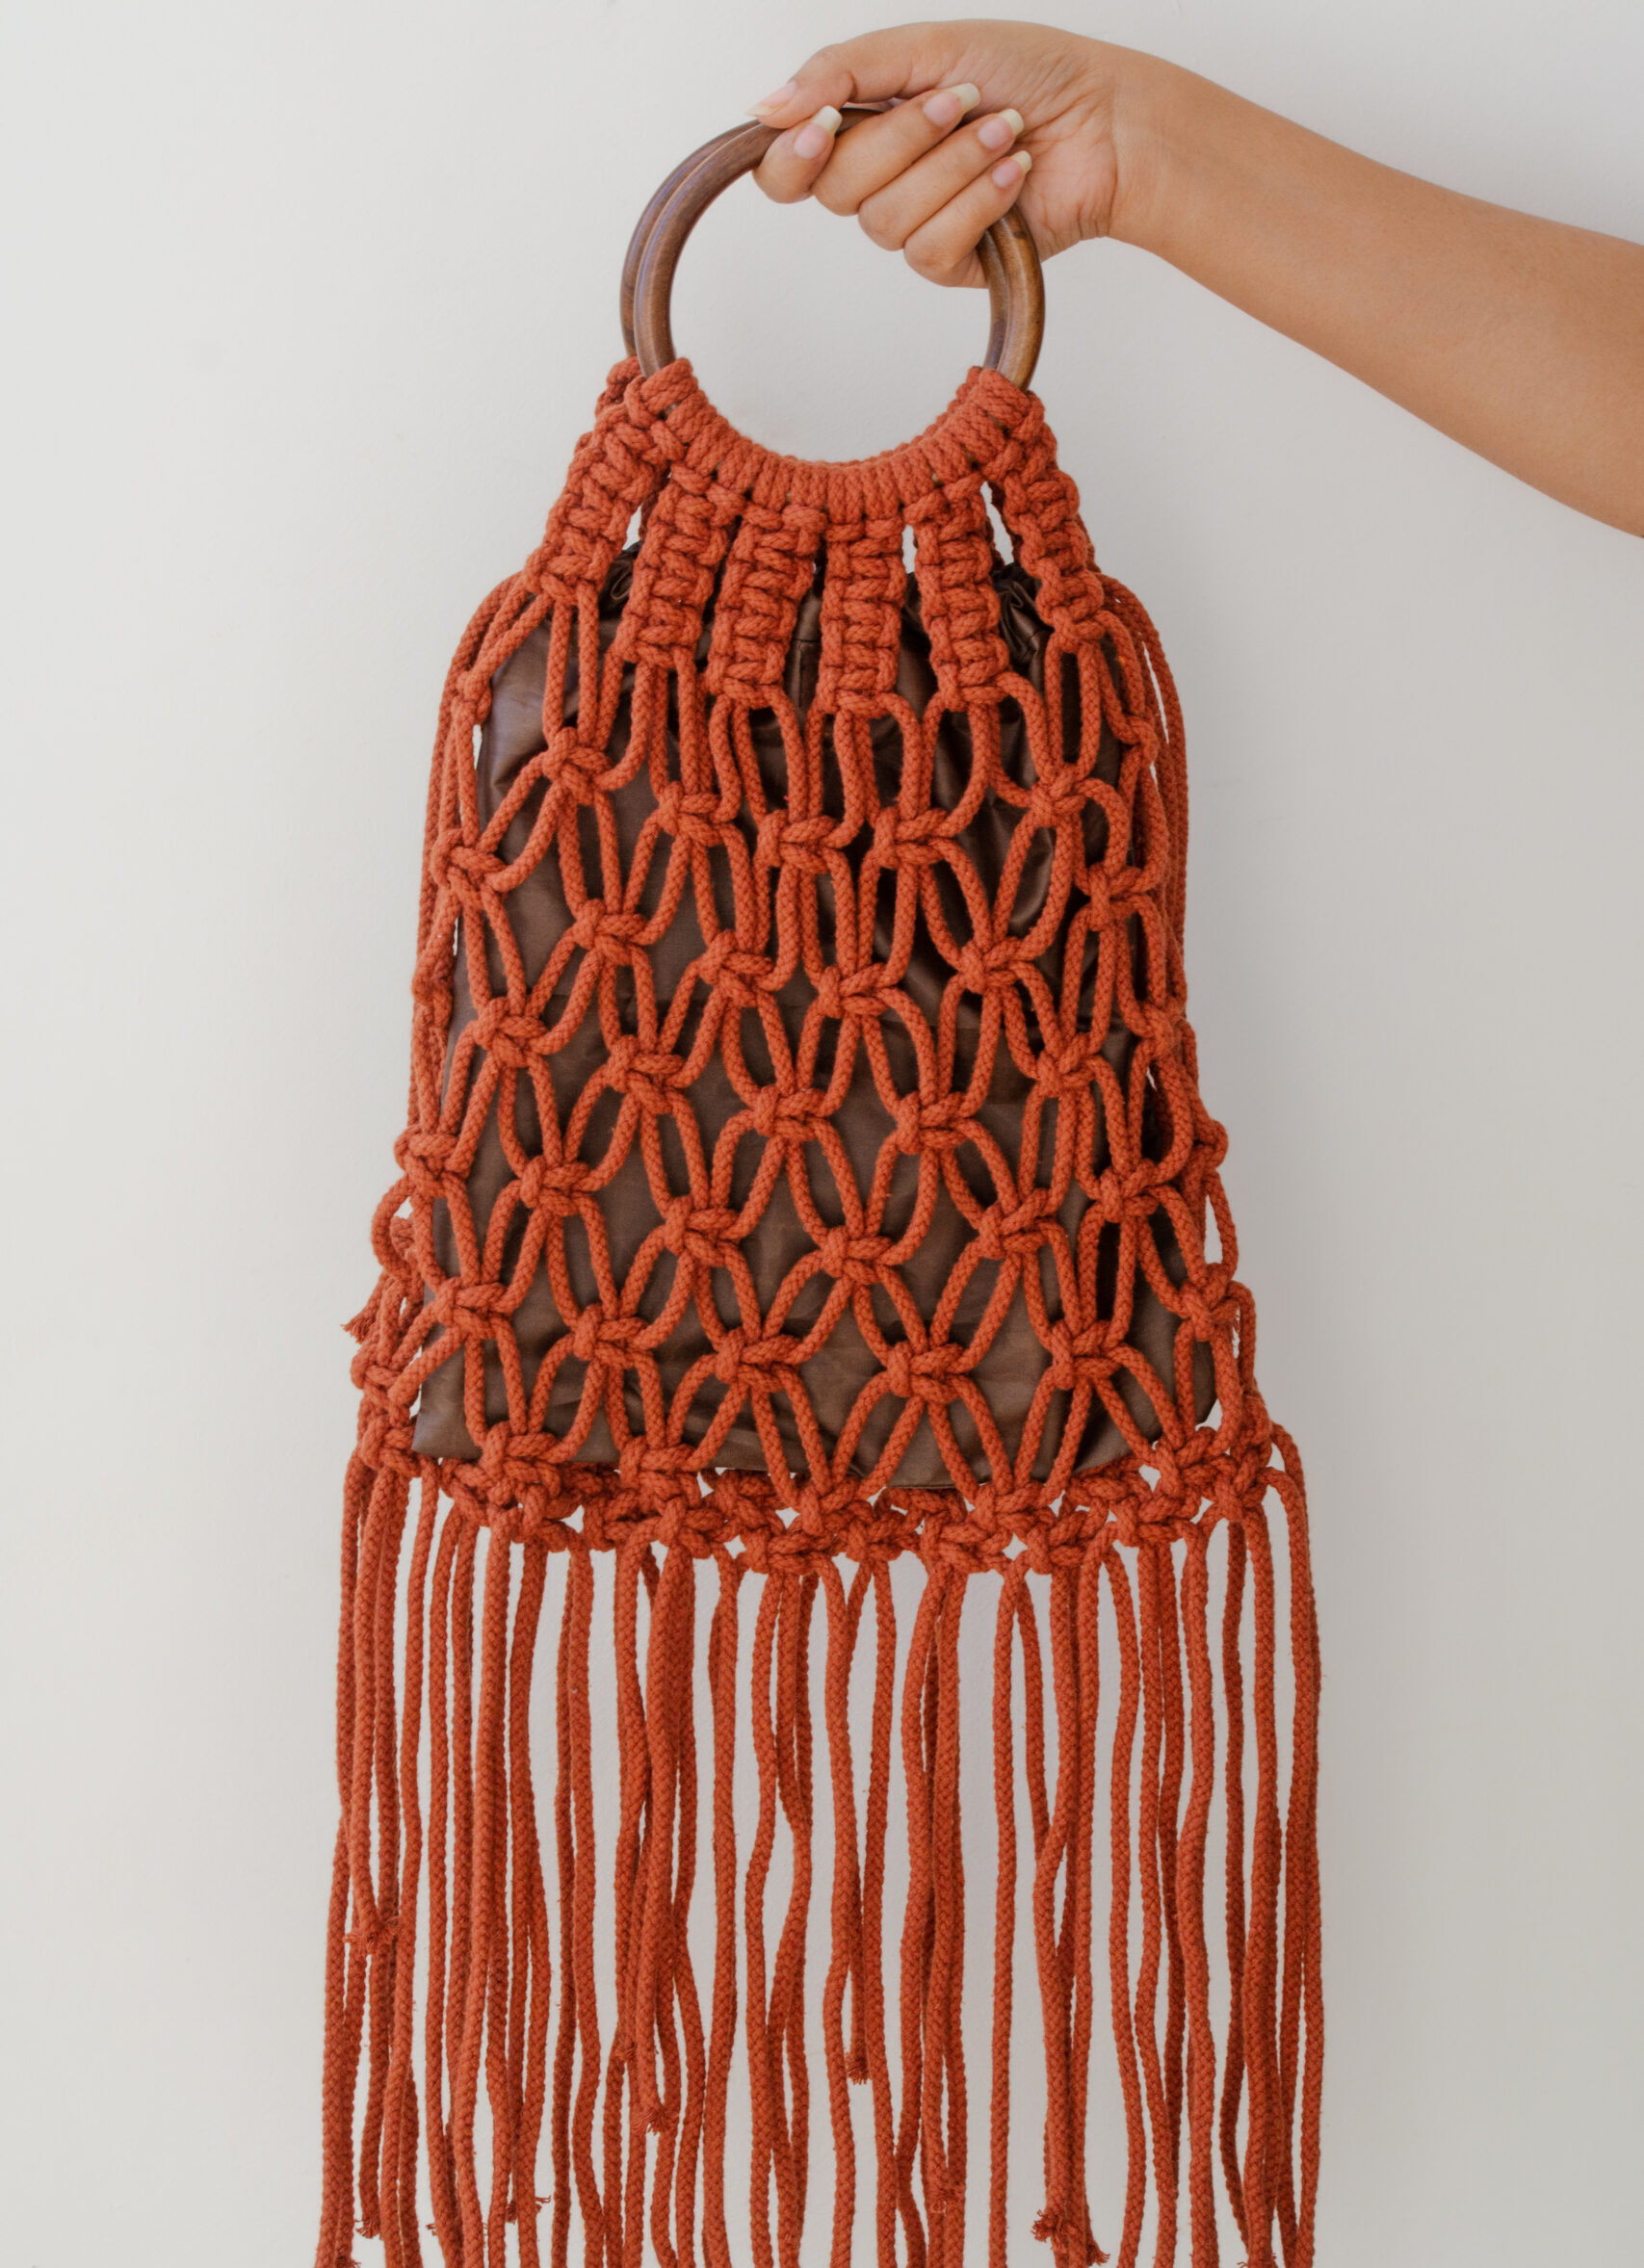 How to make a beautiful long fringe lace purse , boho , hippie bag - YouTube